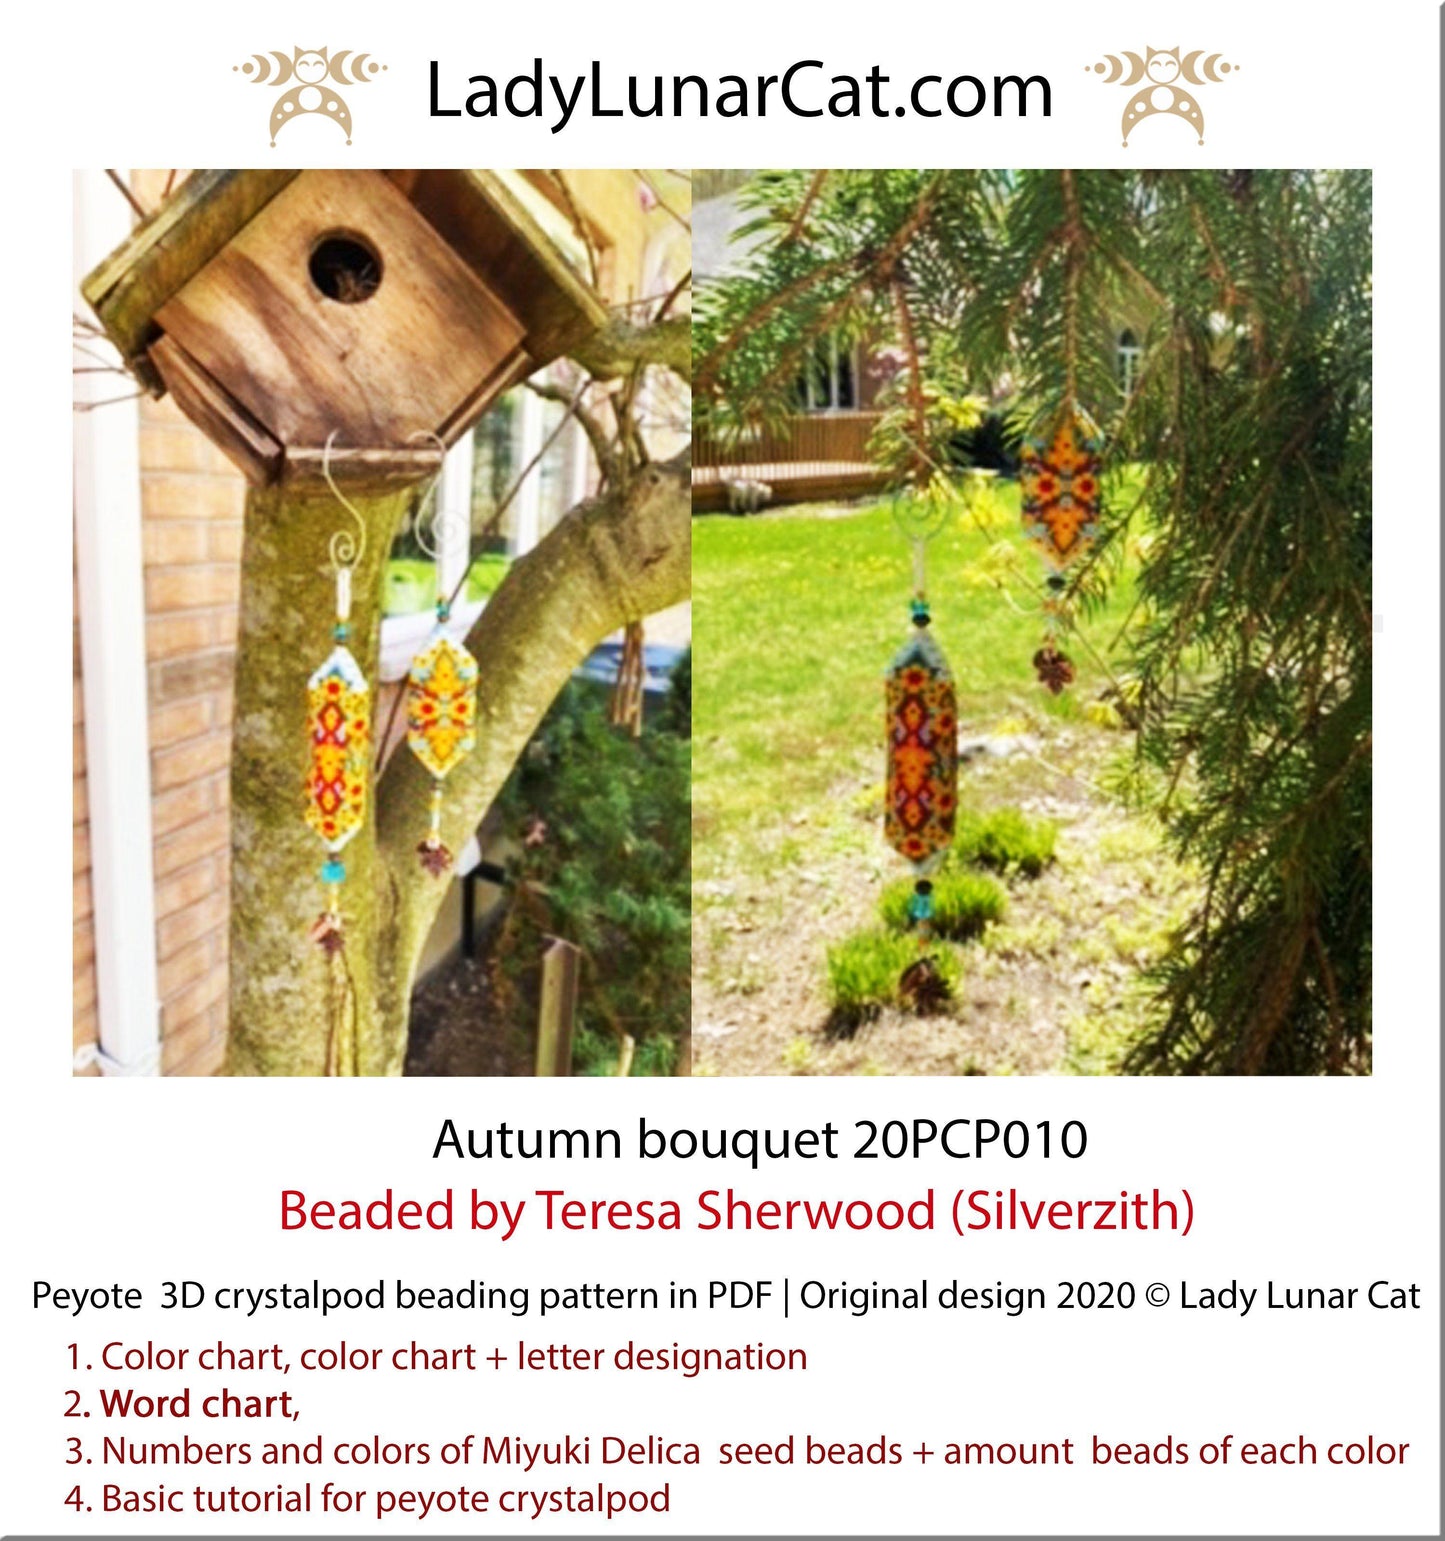 3d peyote pod pattern or crystalpod pattern for beading Autumn bouquet 20PCP0010 LadyLunarCat